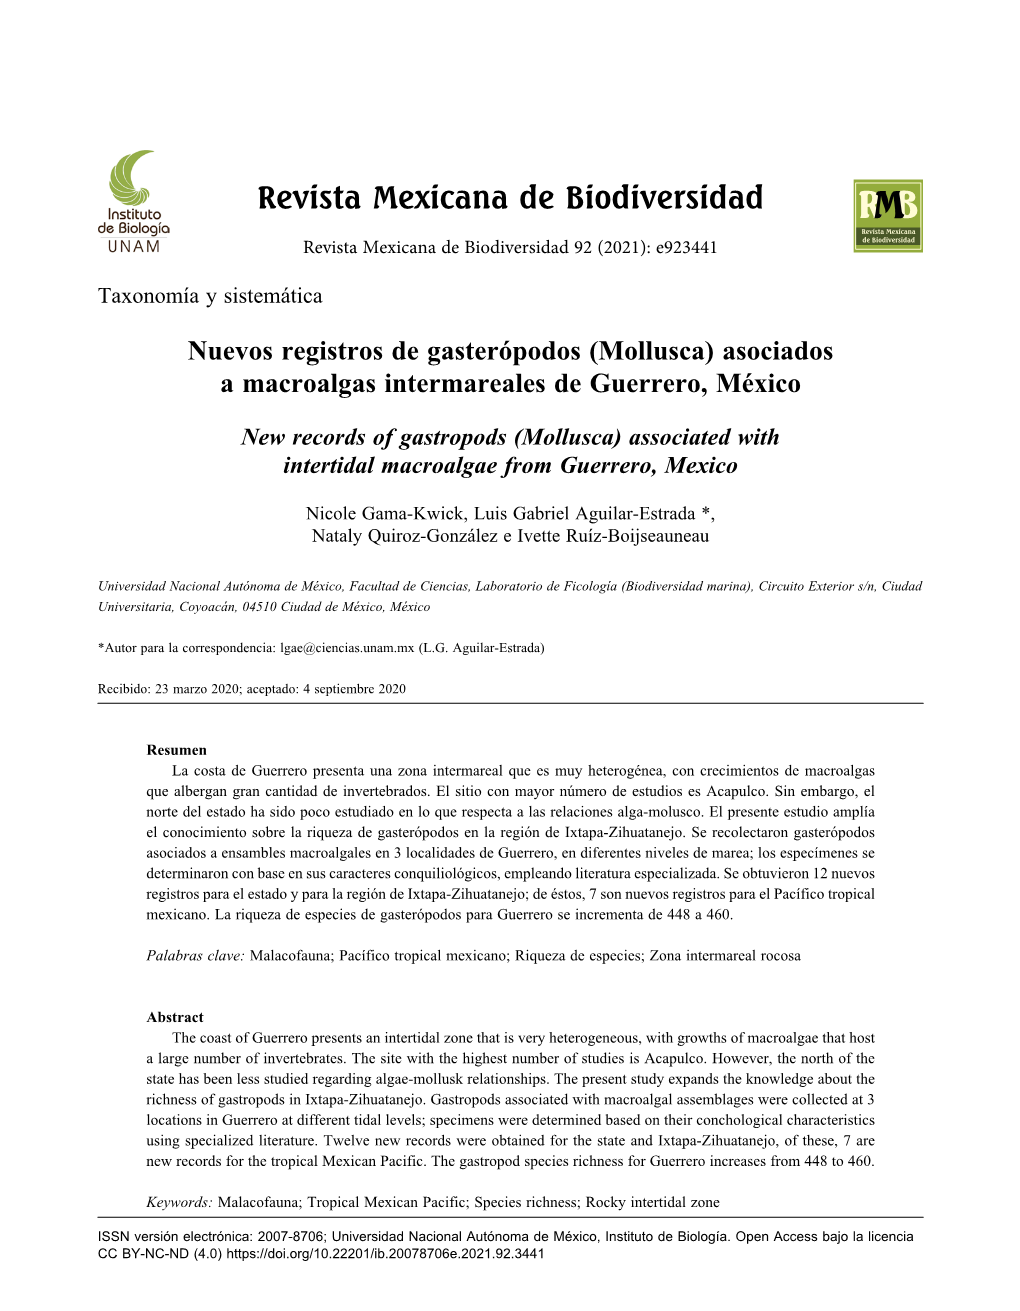 Asociados a Macroalgas Intermareales De Guerrero, México